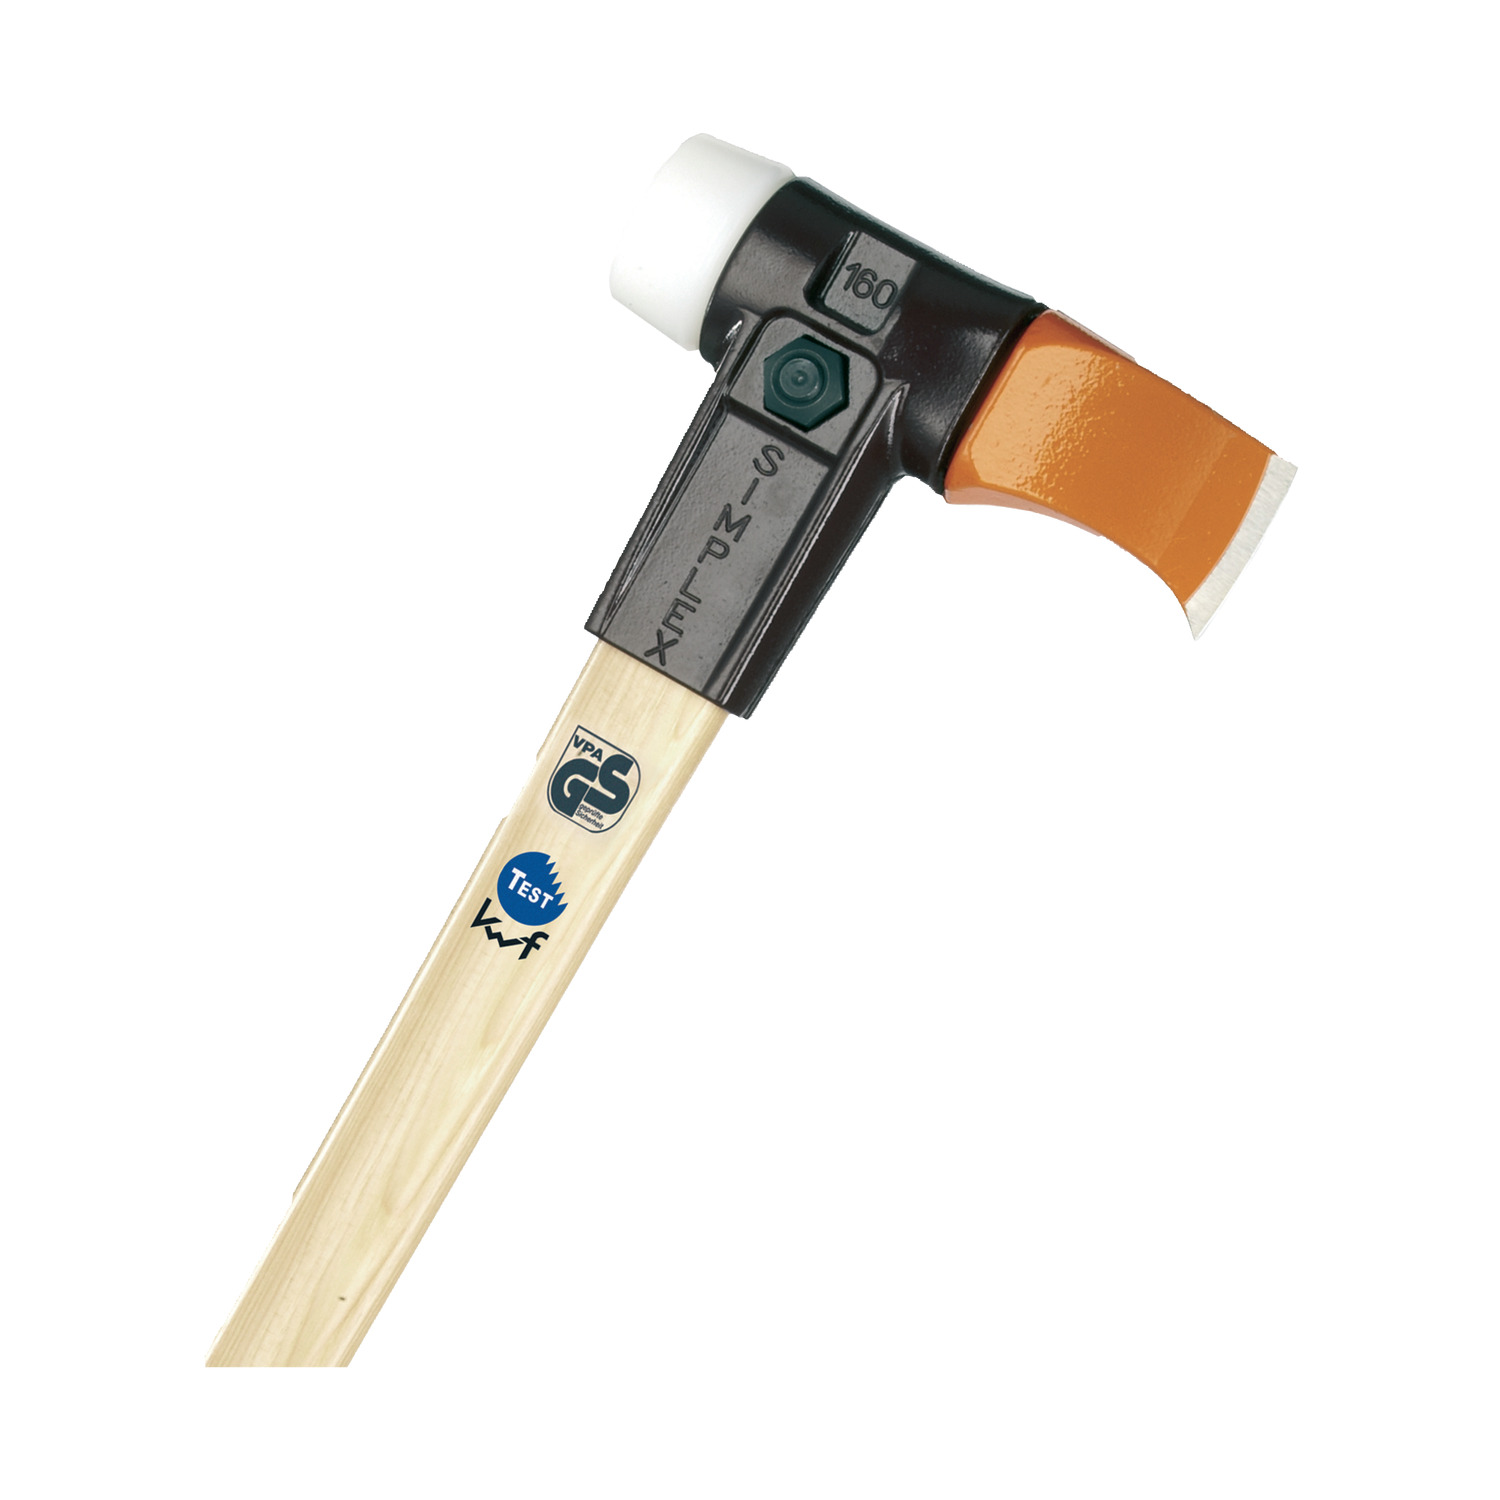 Product 98381, Split Maul Simplex Mallet - Complete cast iron housing - wooden handle / 